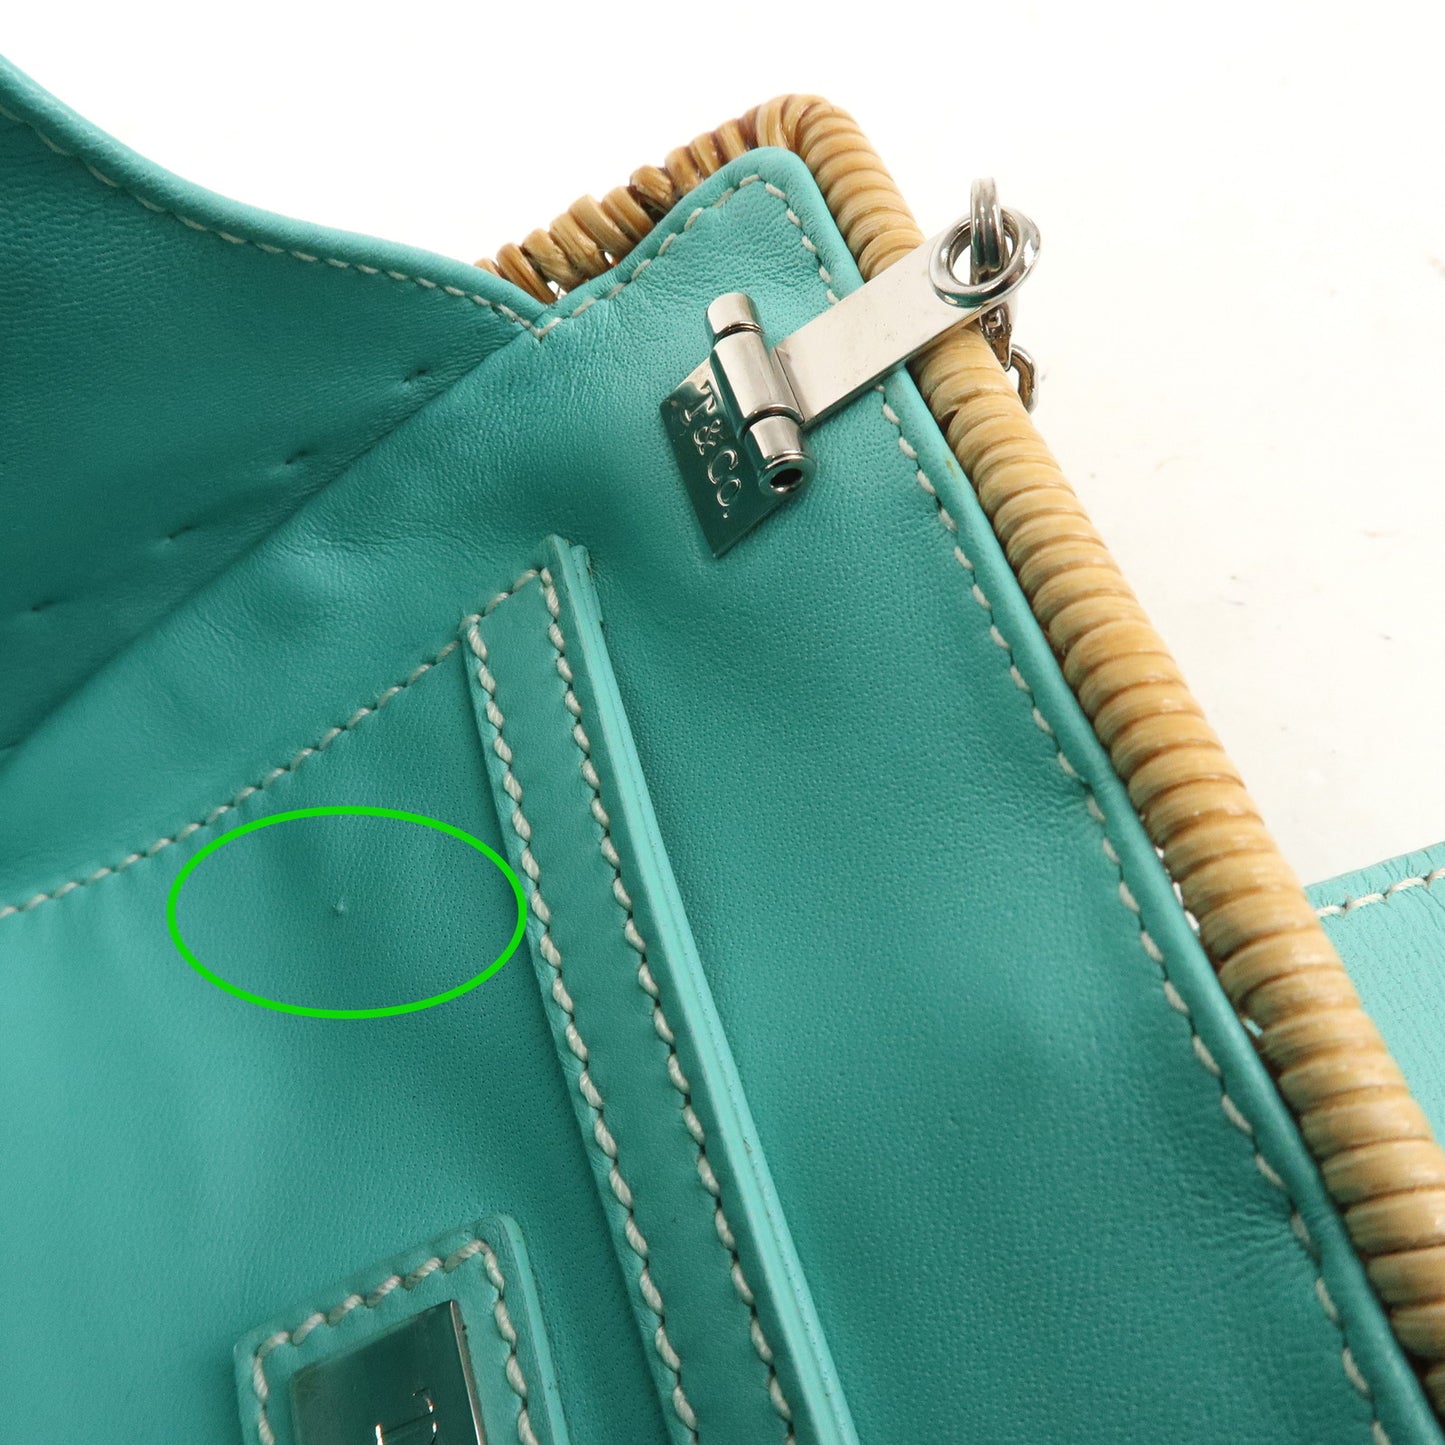 Tiffany&Co. Raffia Leather Chain Shoulder Bag Beige Turquoise